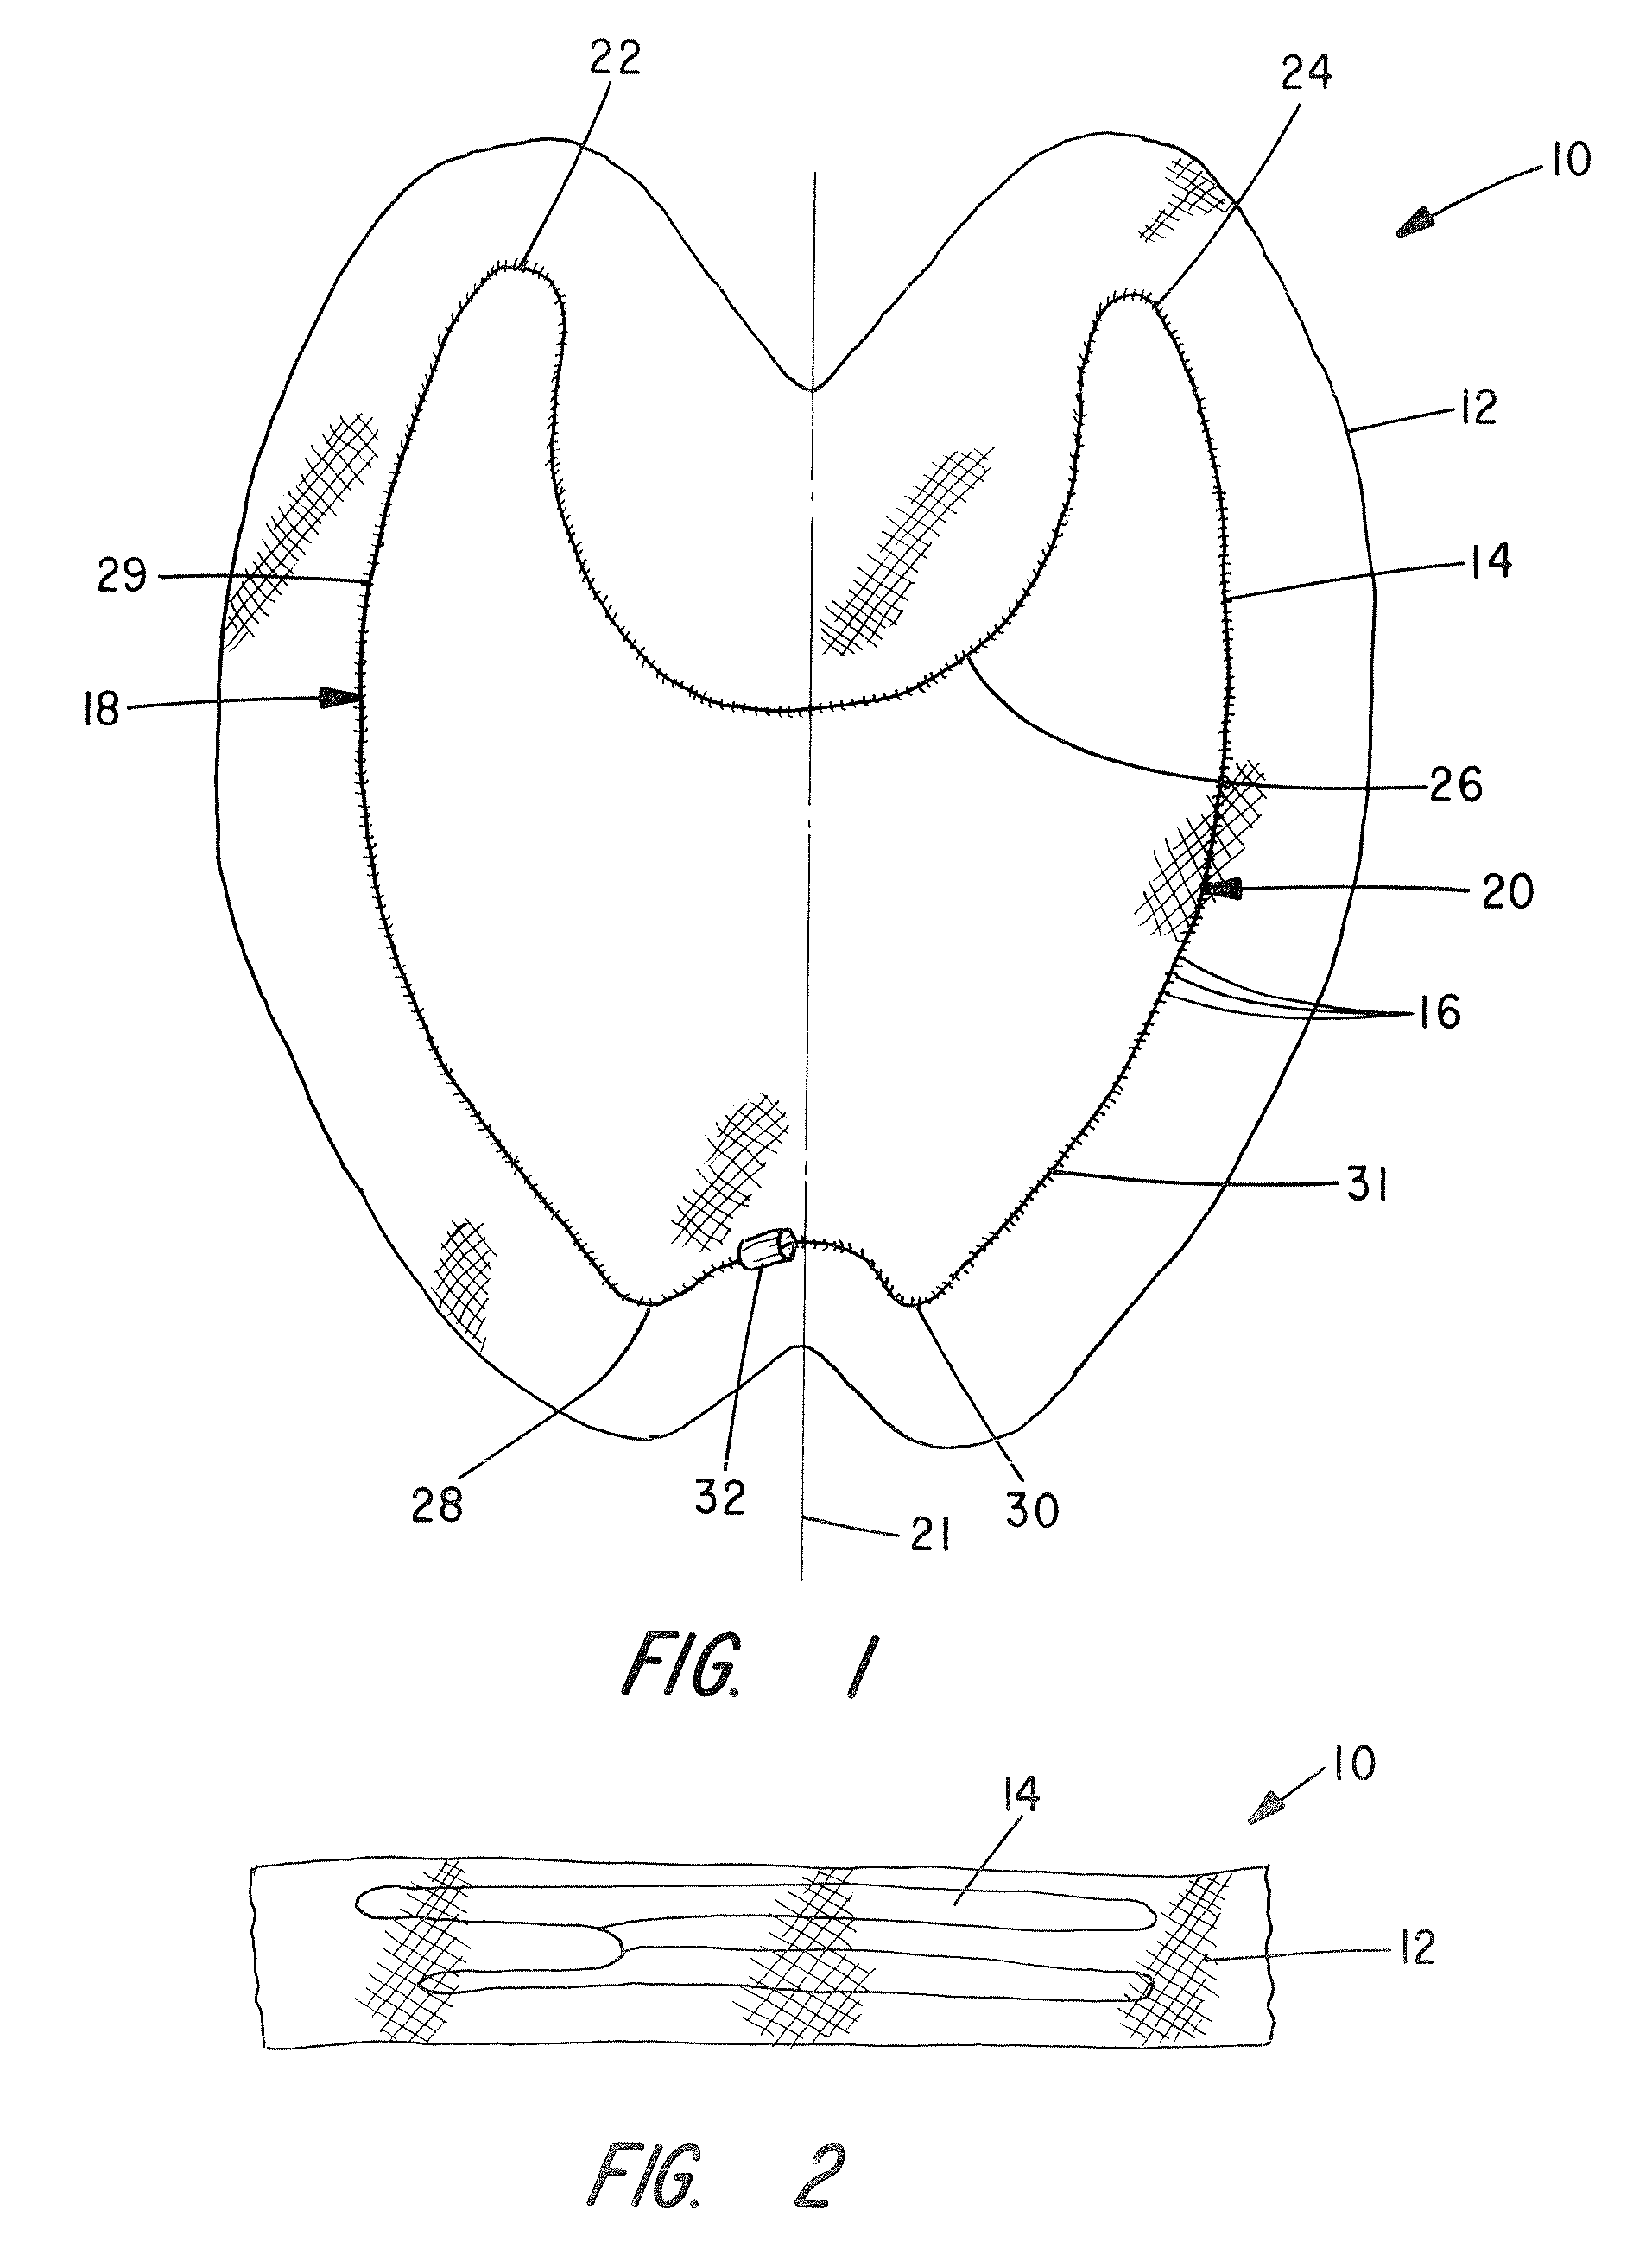 Apparatus and method for pelvic floor repair in the human female